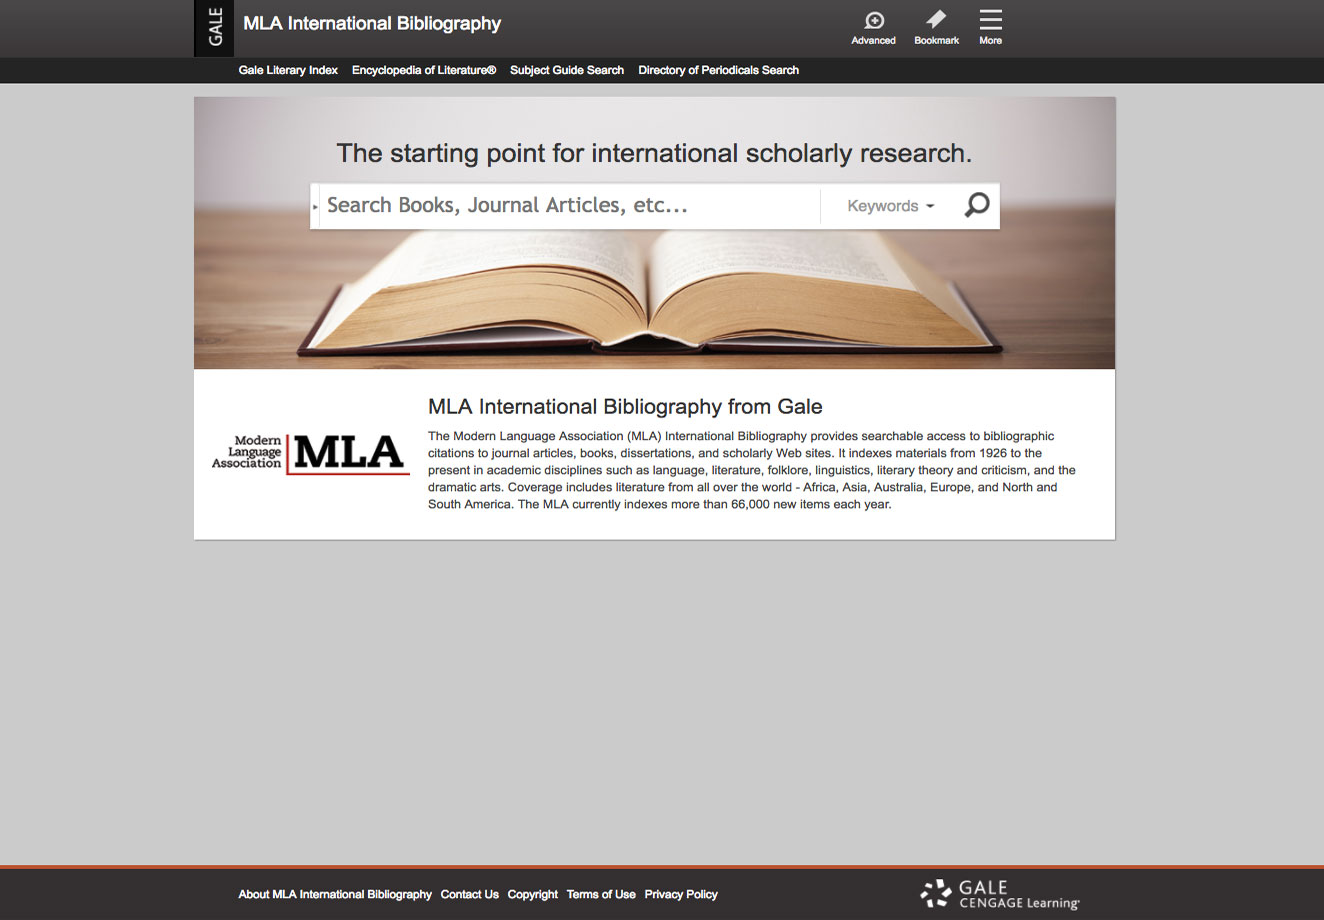 MLA International Bibliography from Gale homepage screenshot.